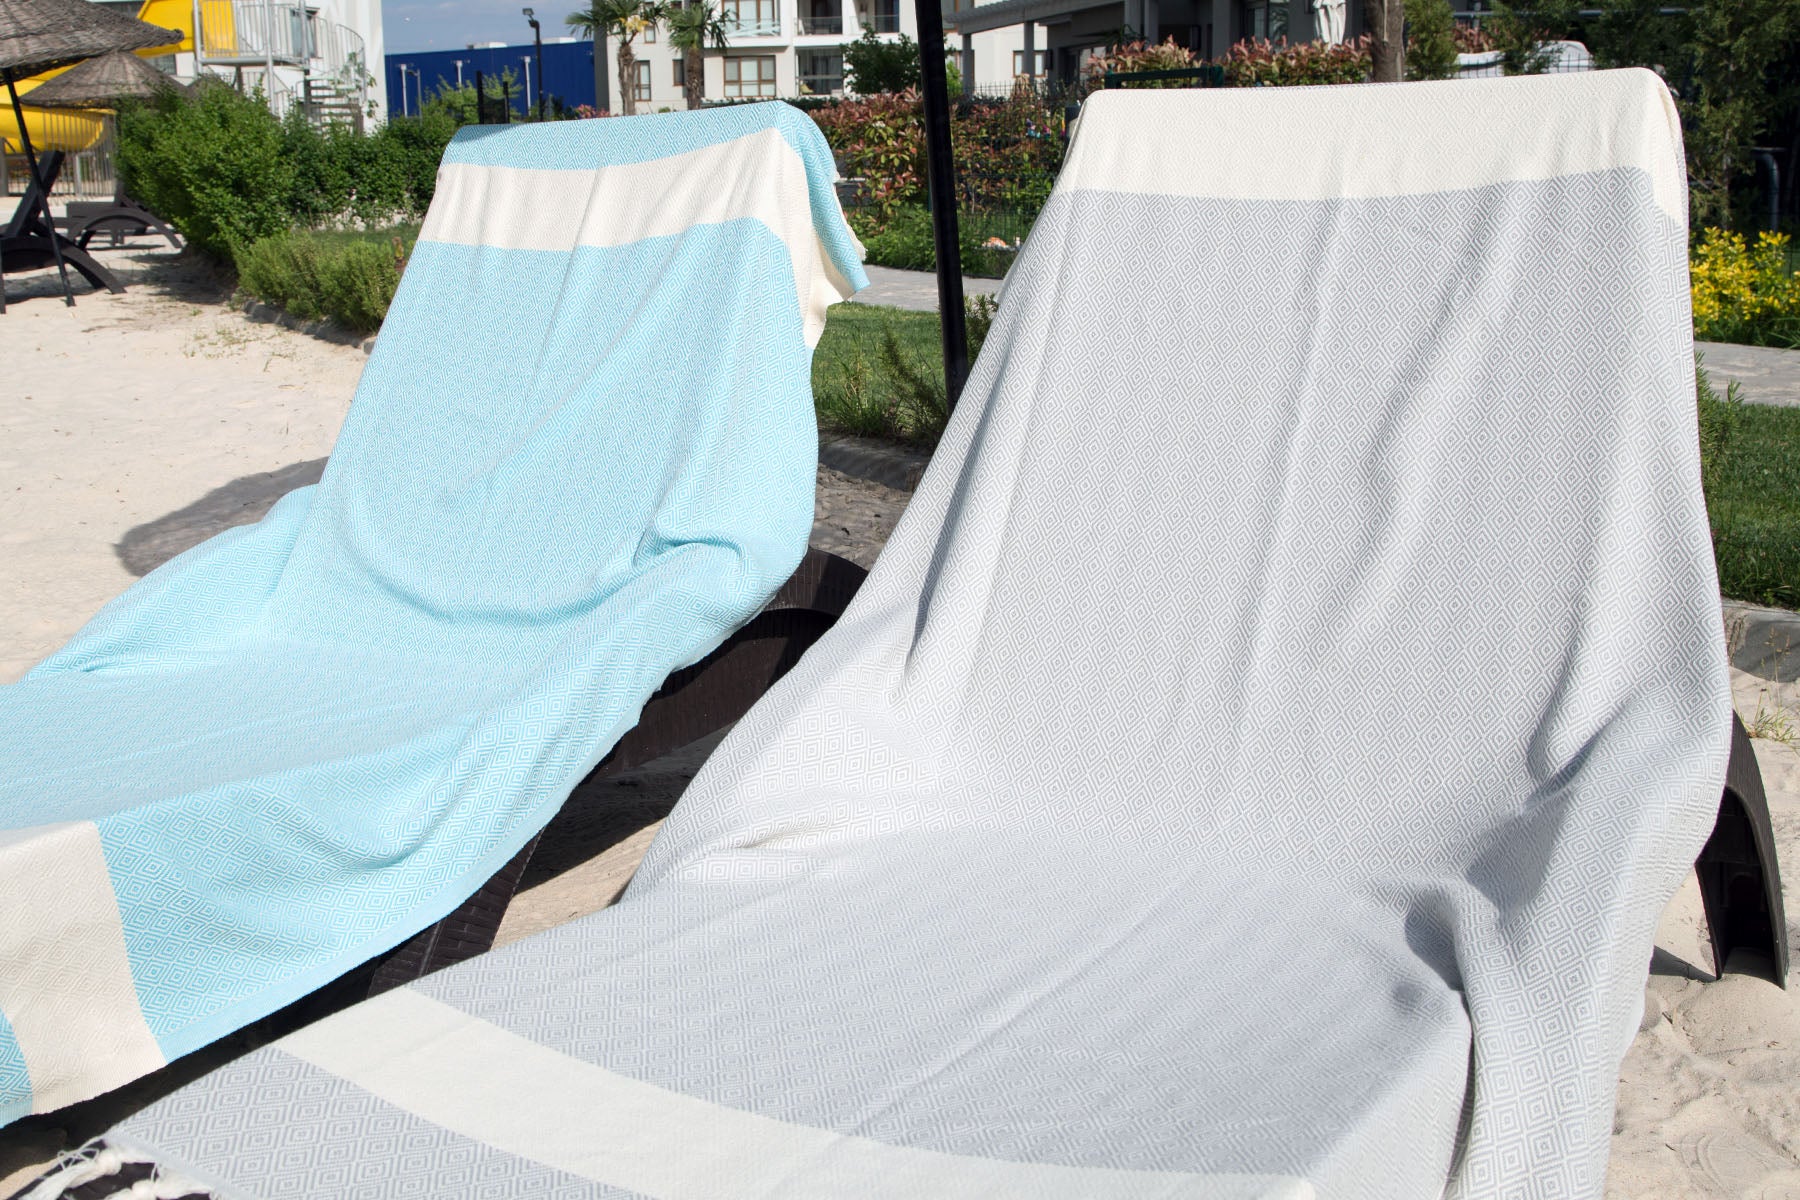 Classic Best Turkish Beach Towels Set of 4 (Variety)